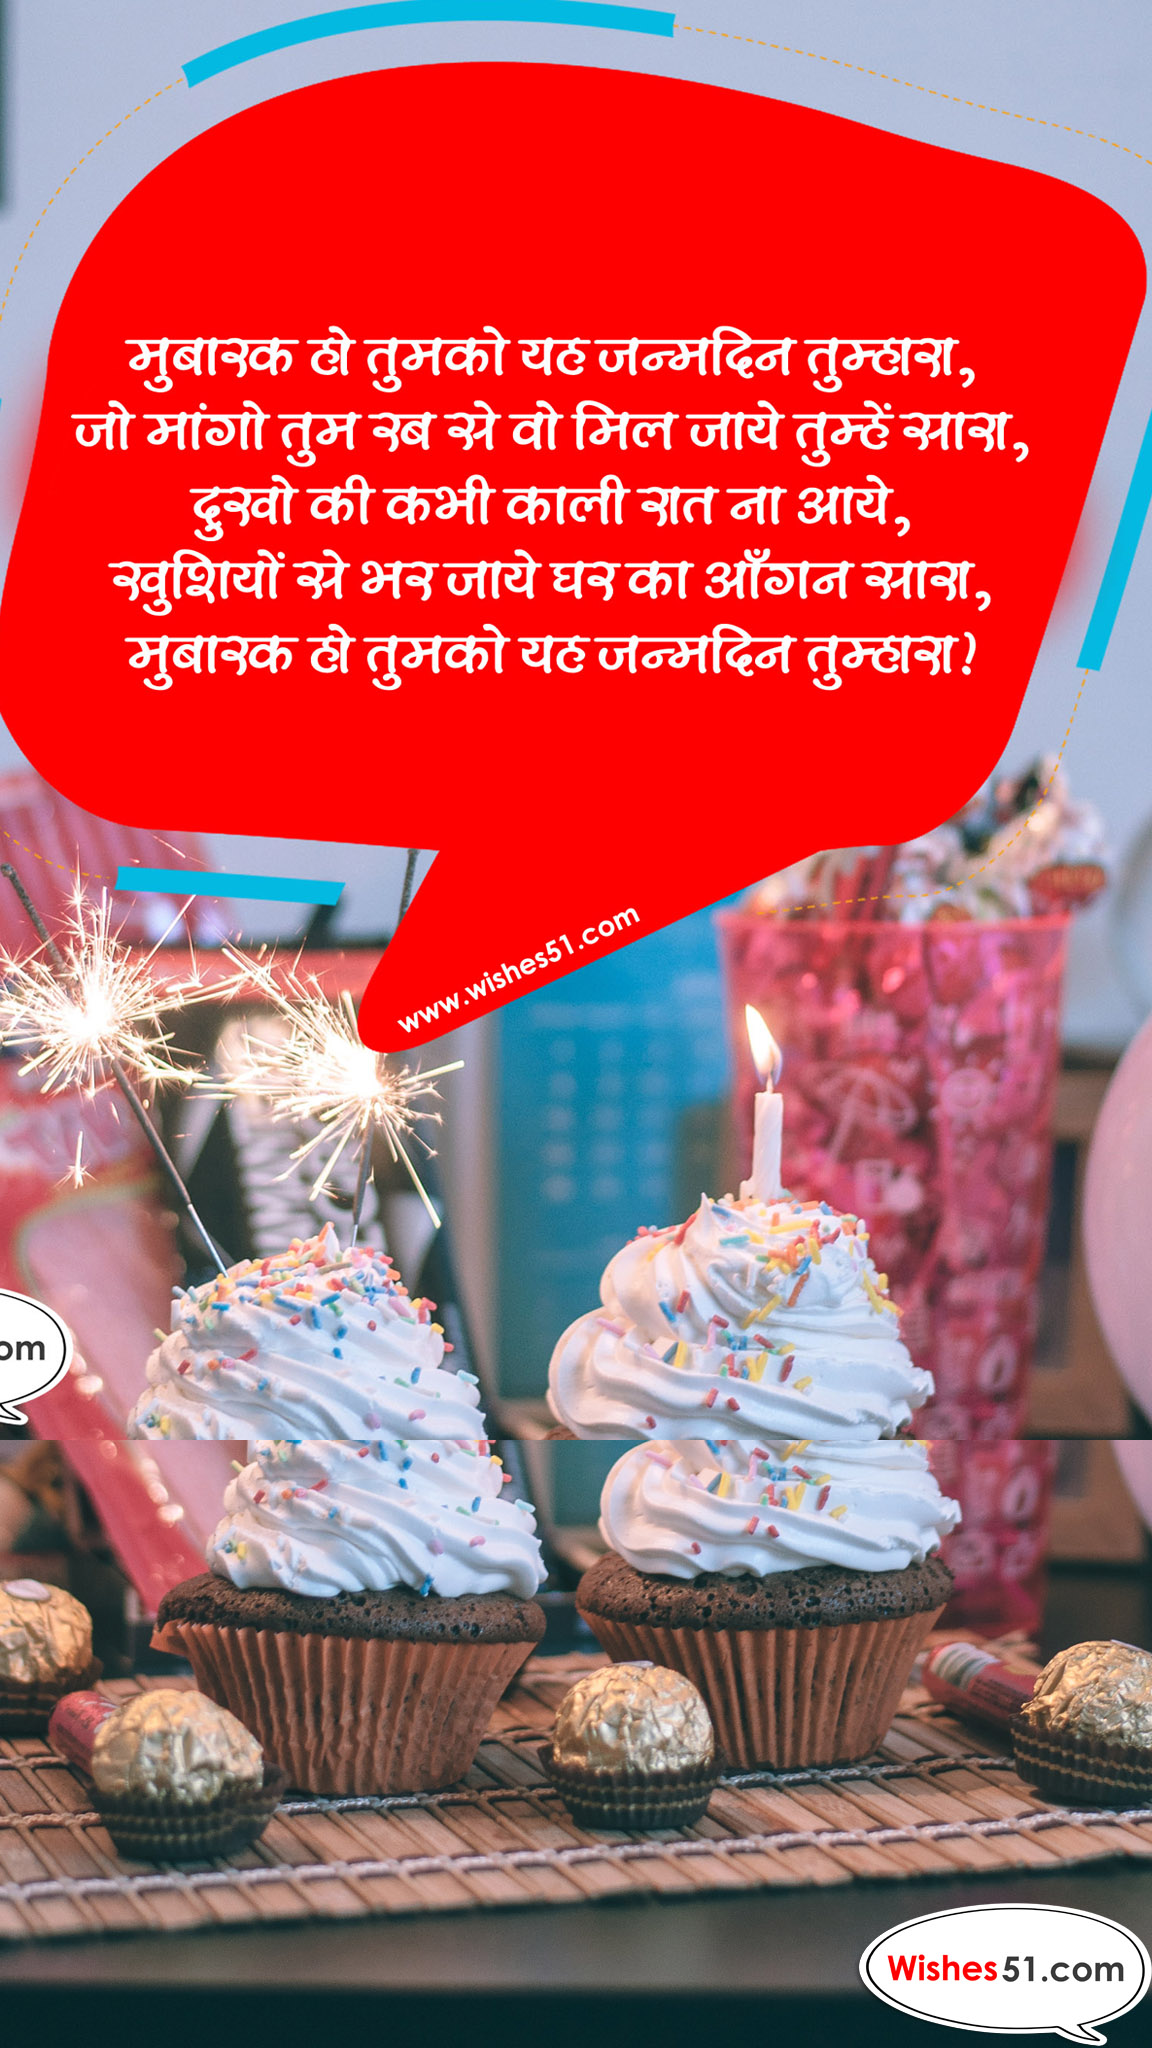 Top 5 Happy Birthday Wishes in Hindi | Best Happy Birthday Wishes in Hindi